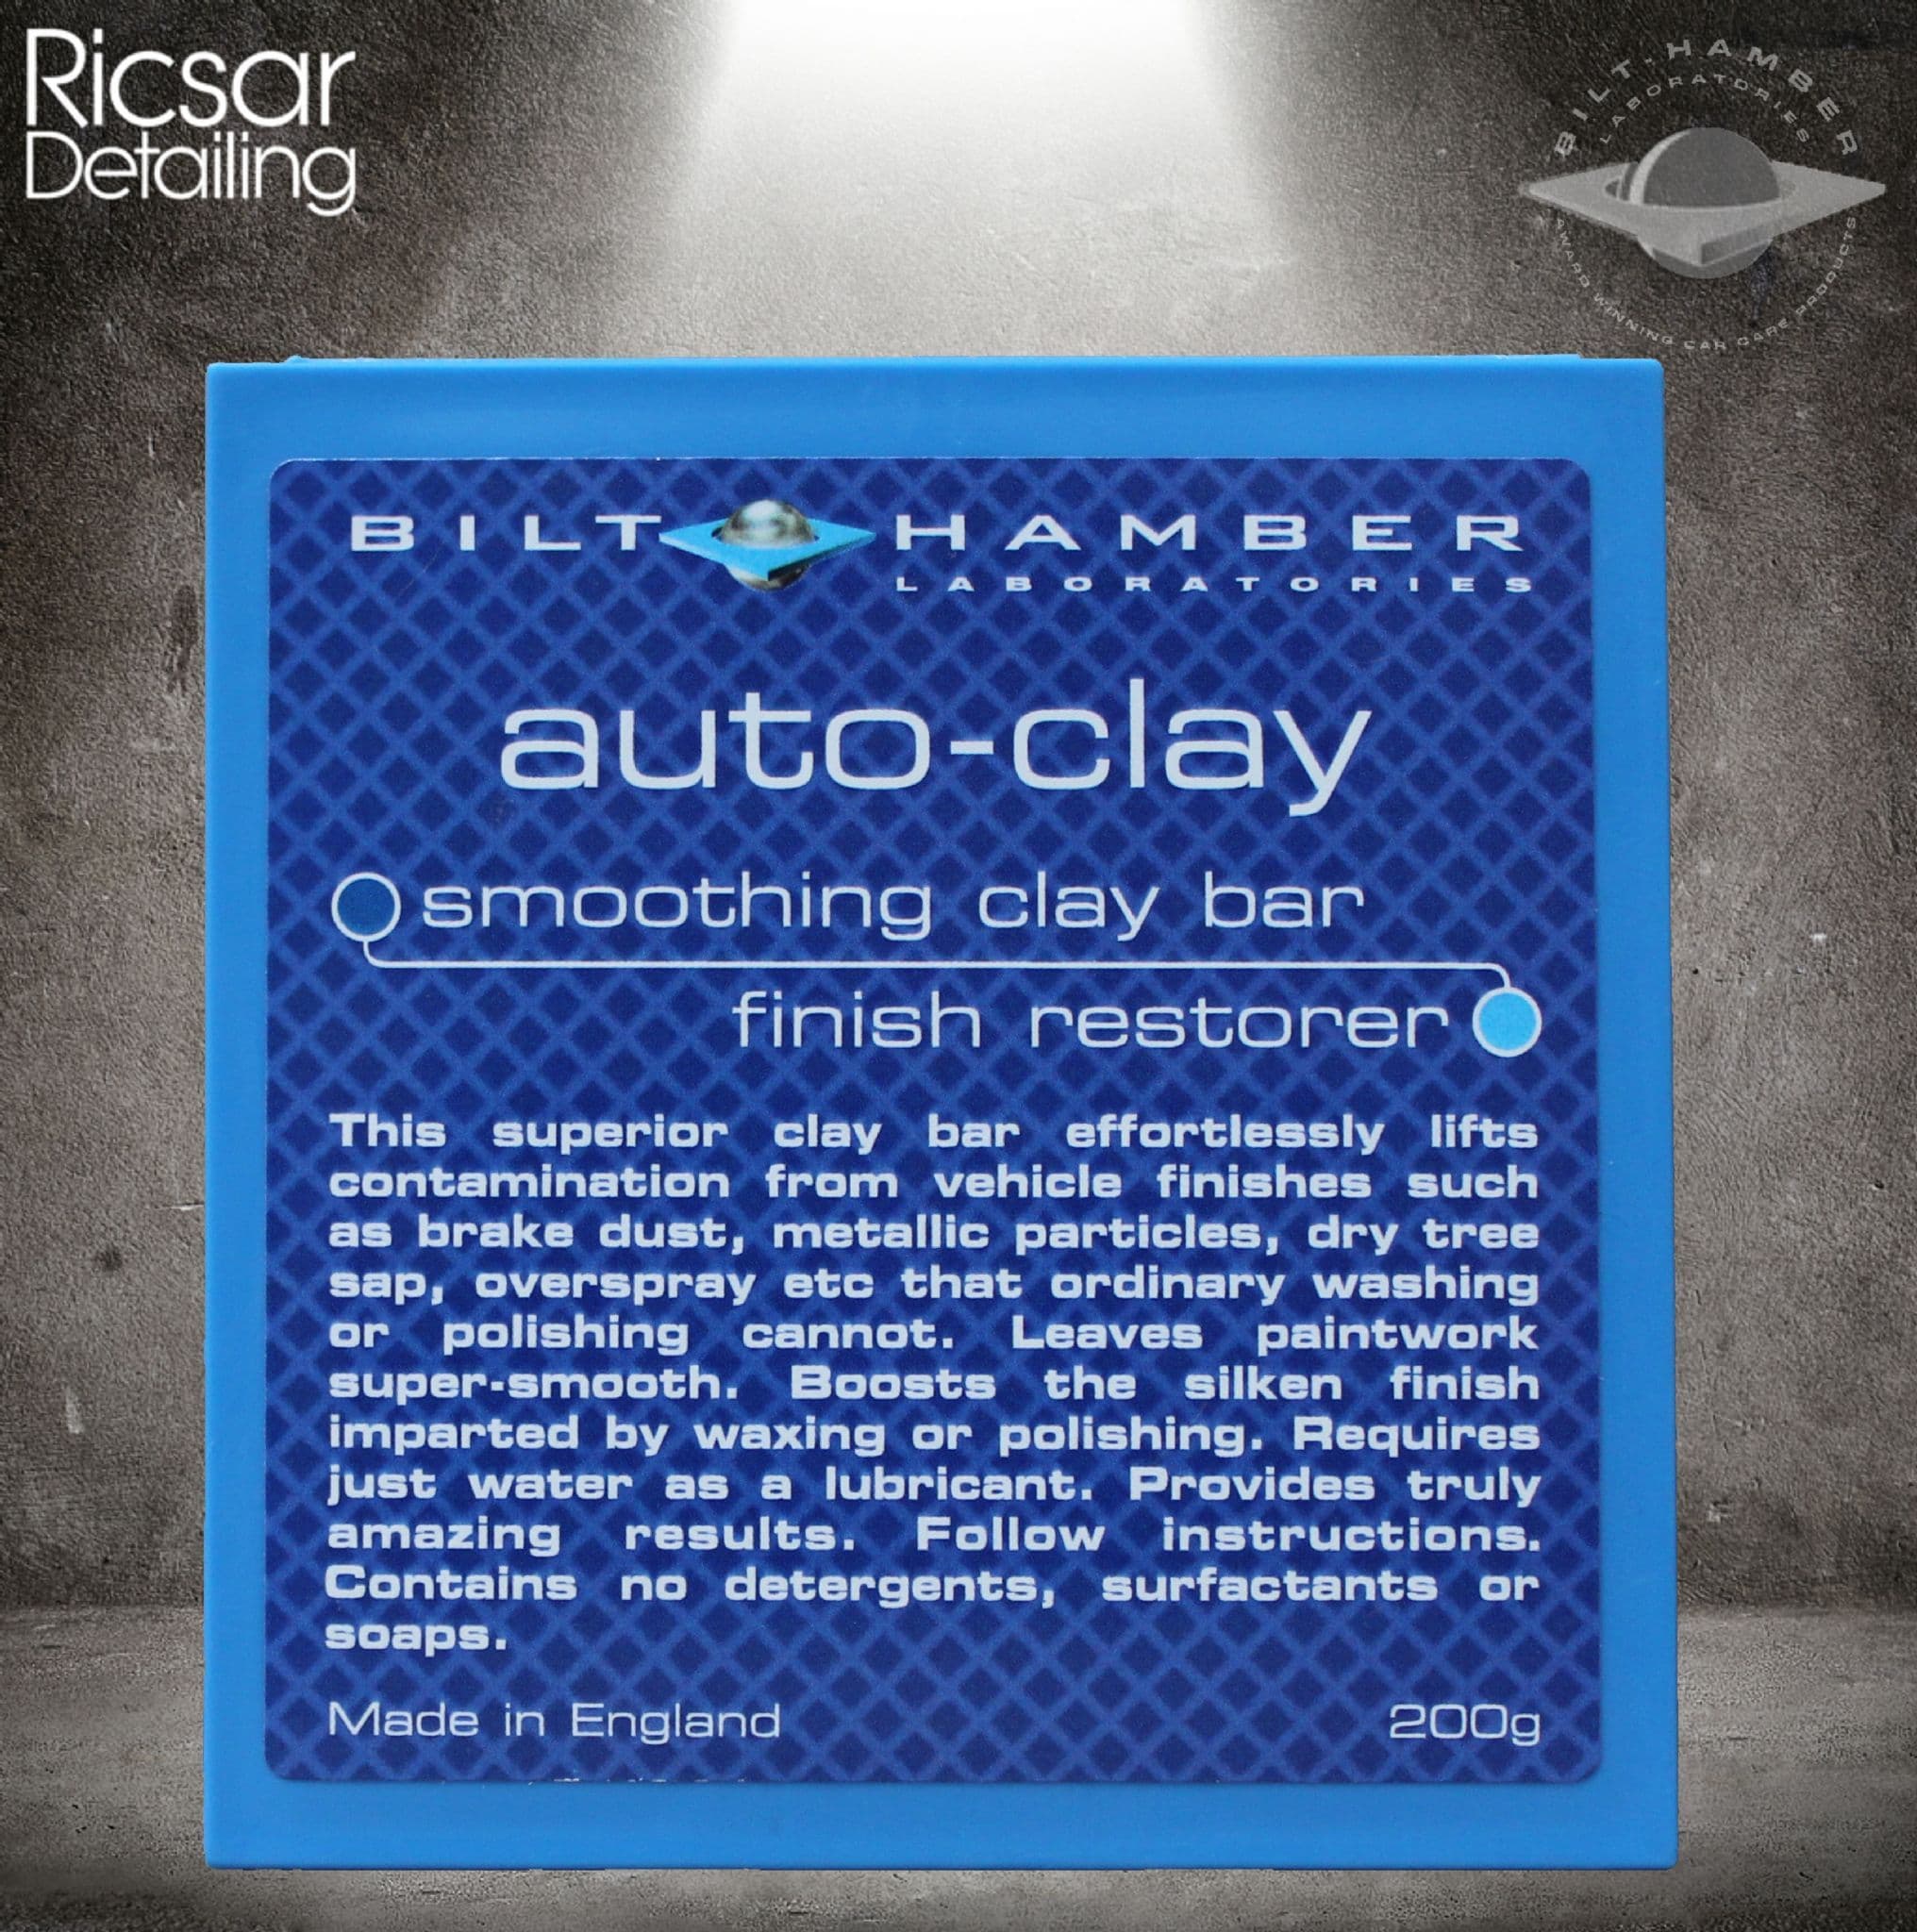 Bilt Hamber Auto Clay Regular Review - Easy to Use Clay Bar